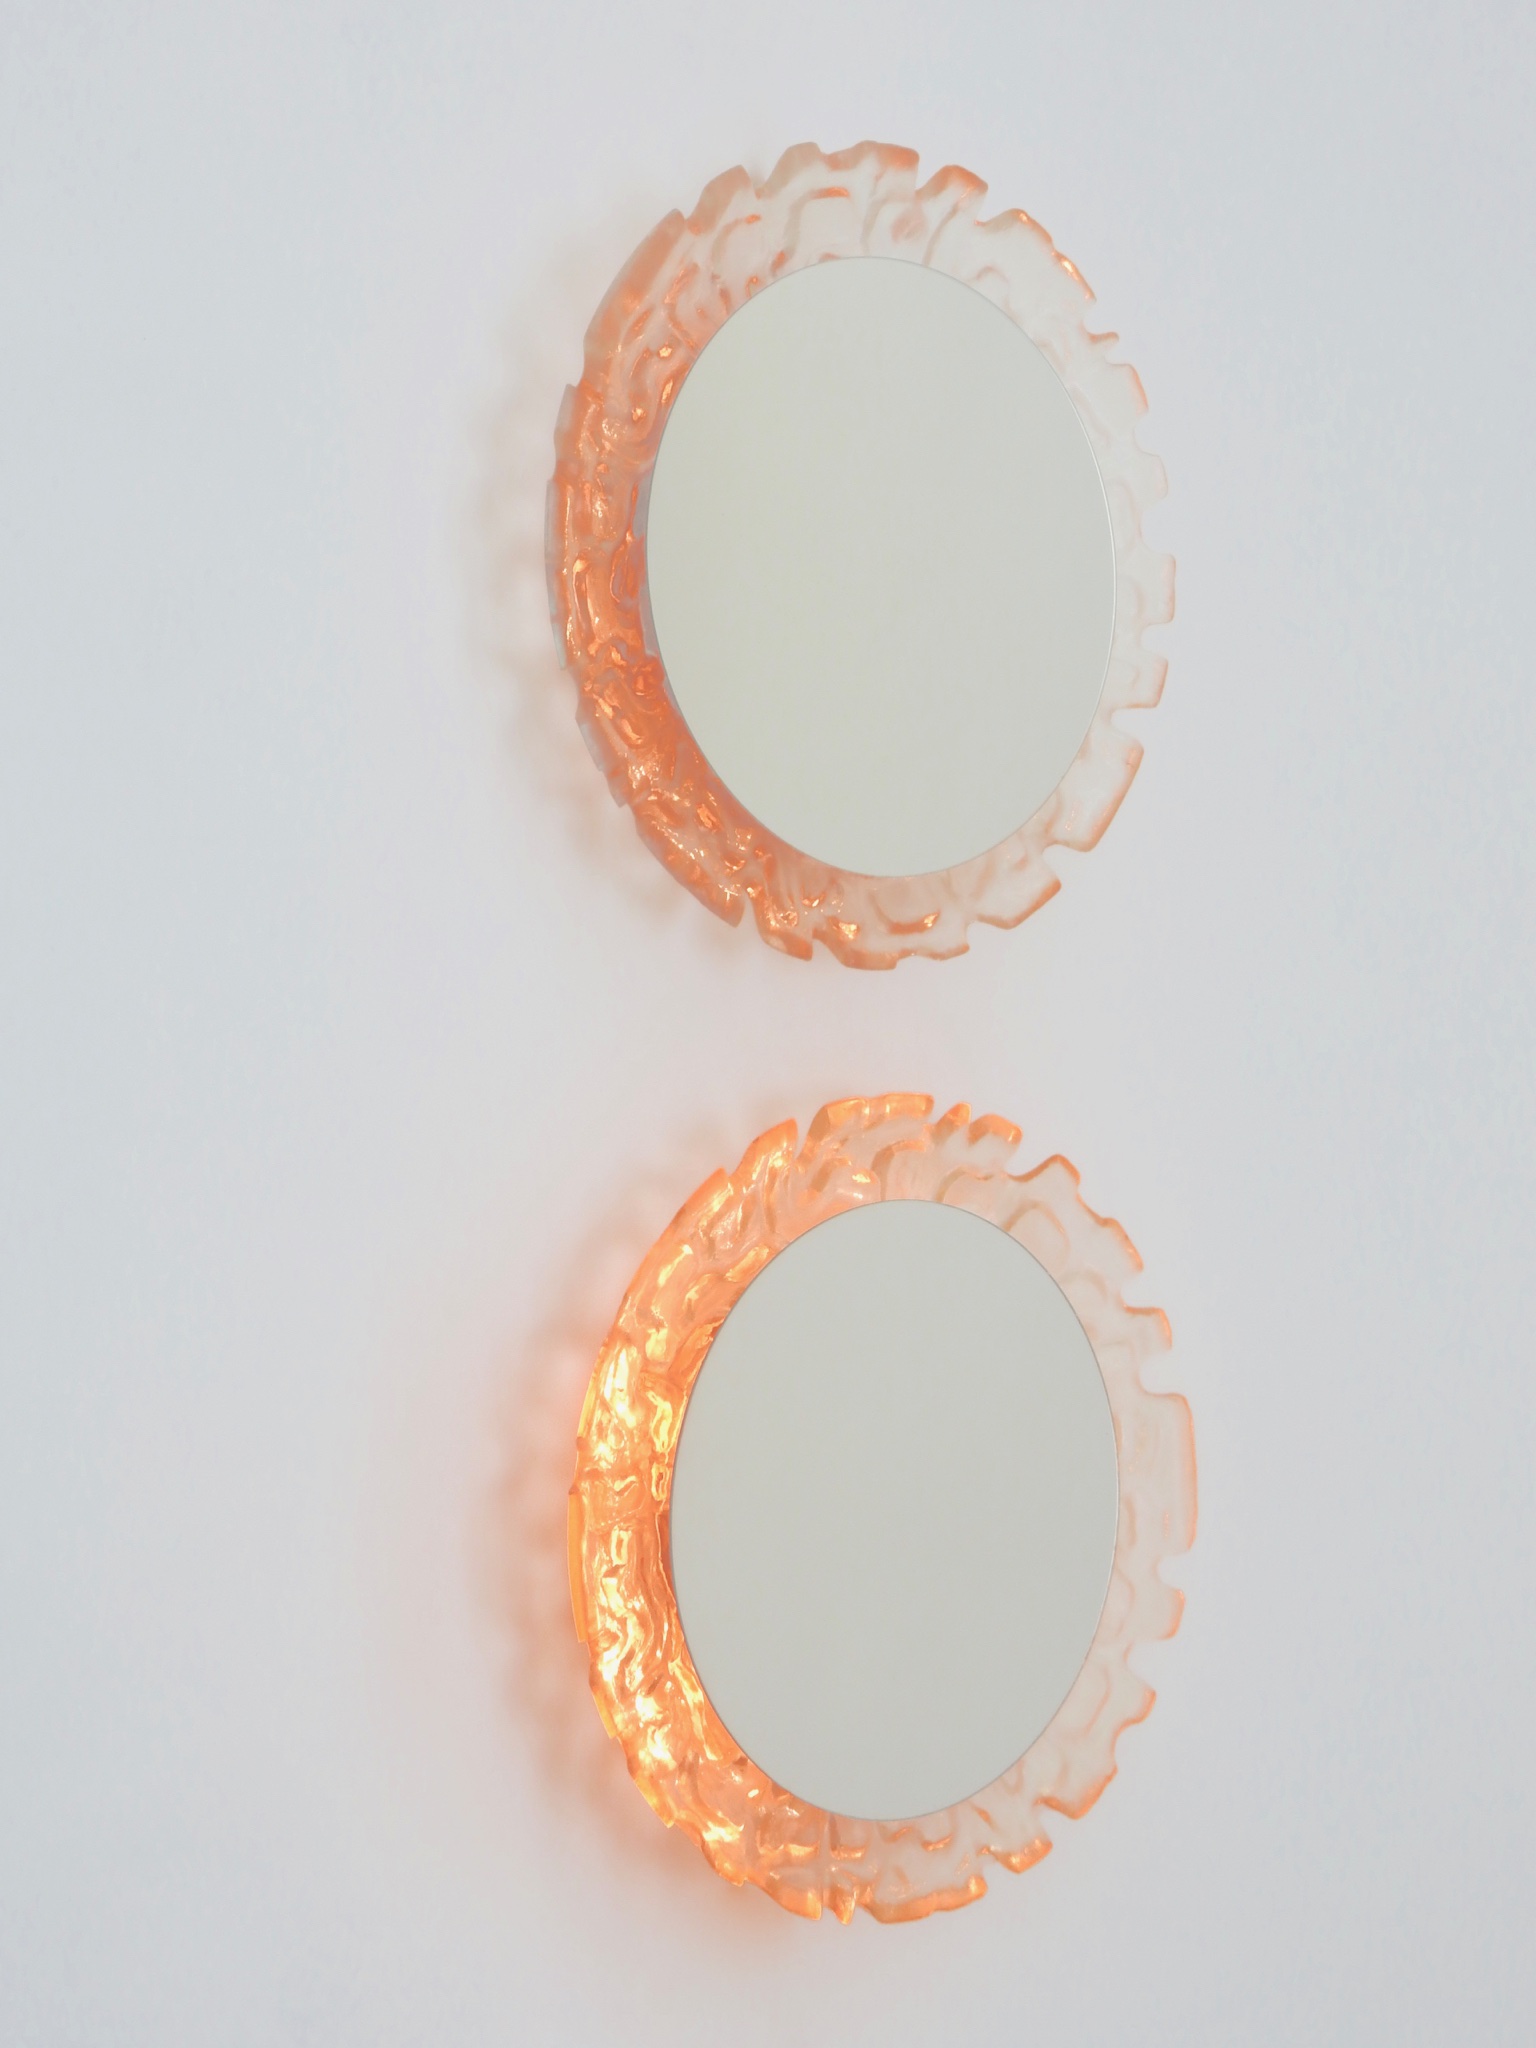 Sold - Round Illuminated Mirrors